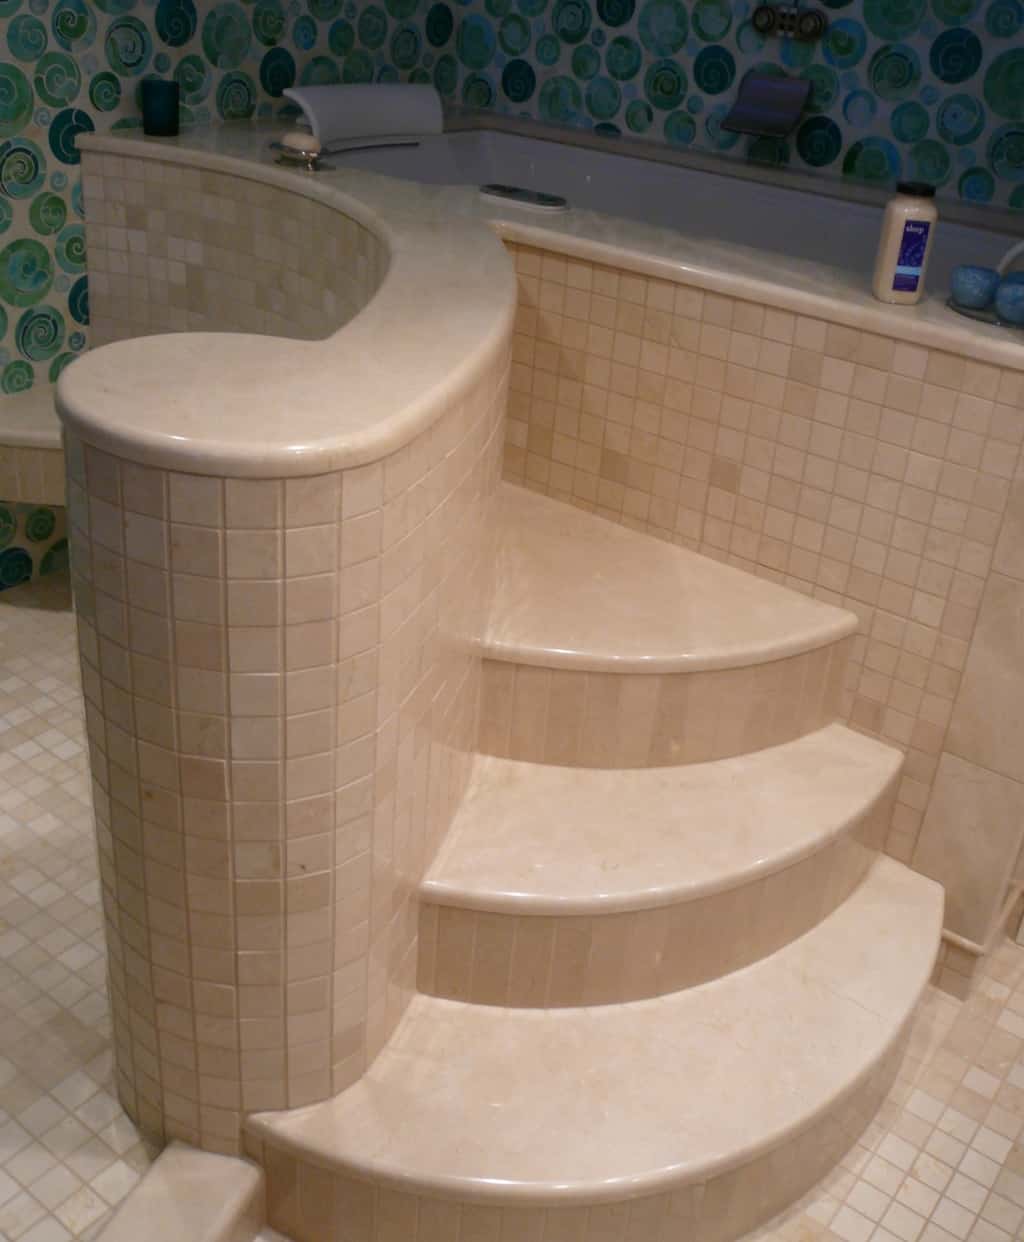 cypress homes salem oregon - Custom Craft Bathroom design.